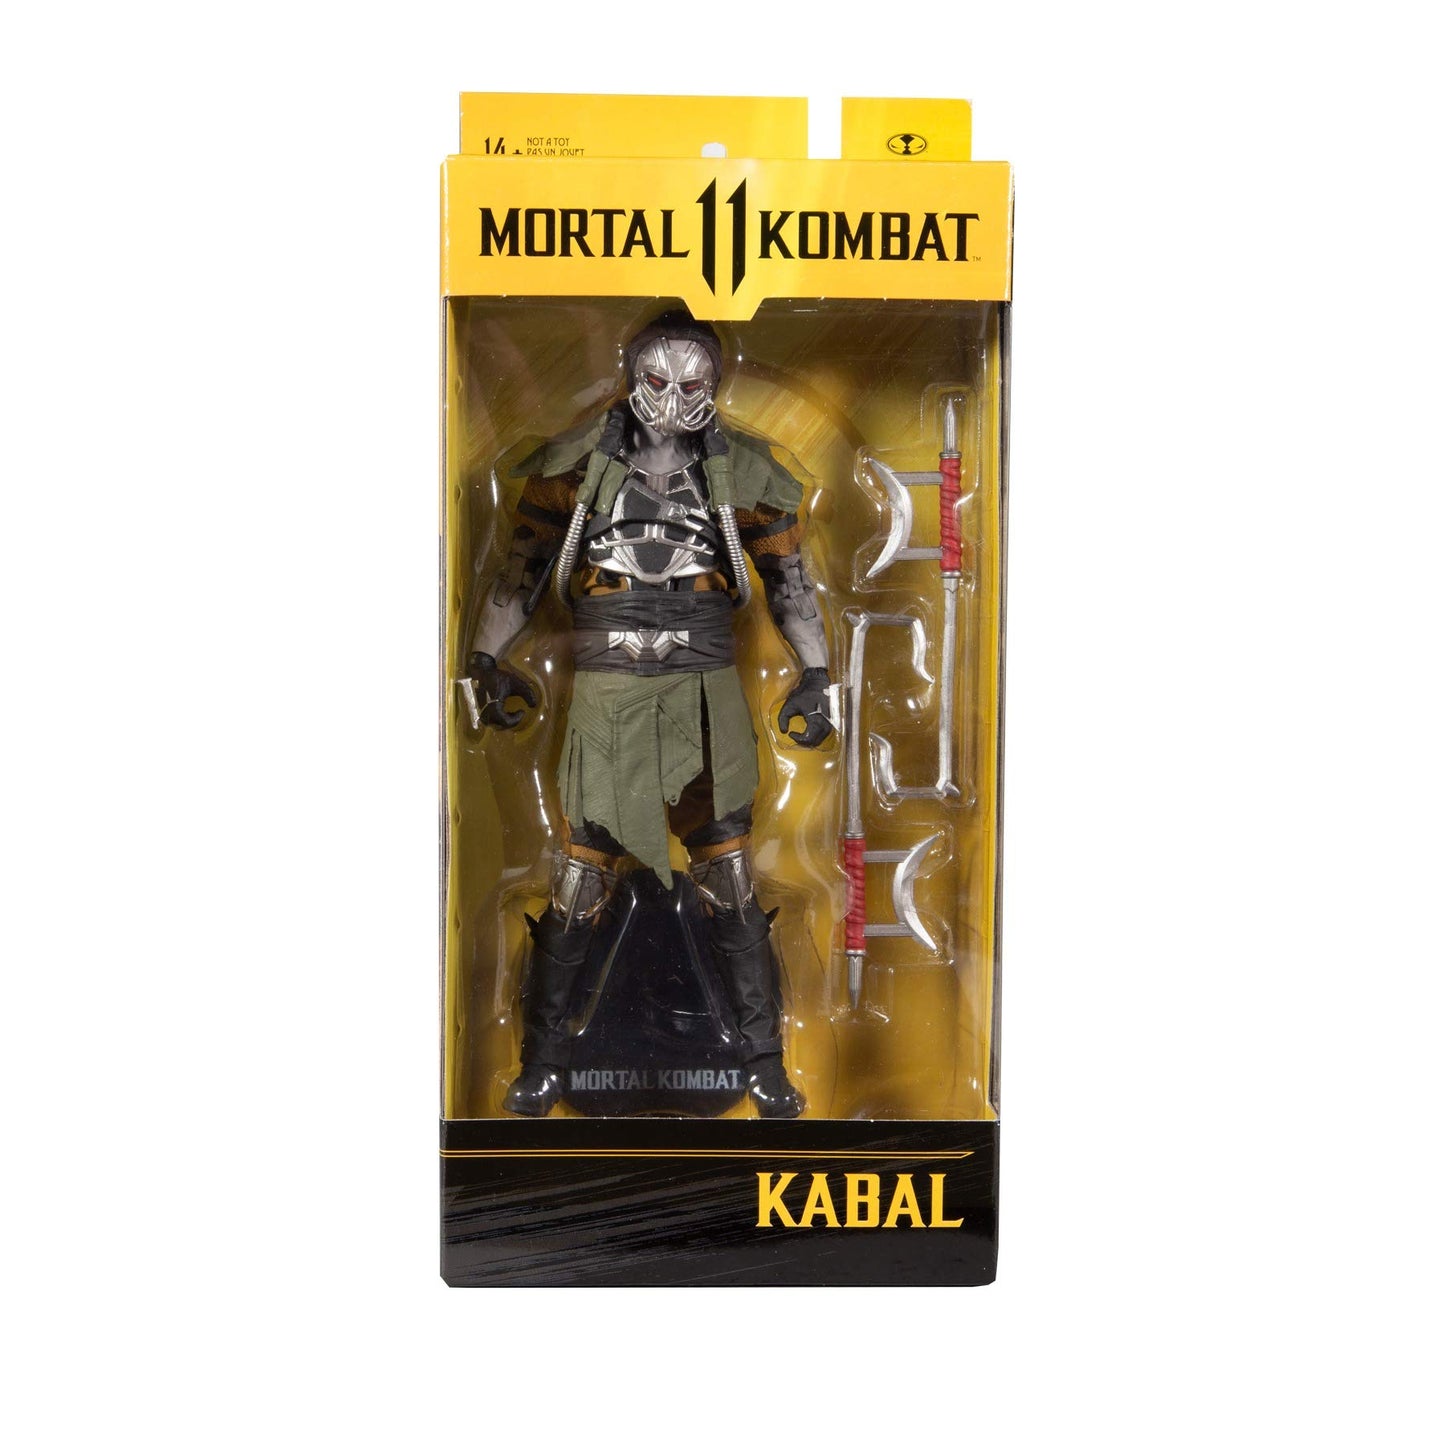 McFarlane Toys - Mortal Kombat - Kabal: Hooked Up Skin 7"" Action Figure, Multicolor (11047-0)